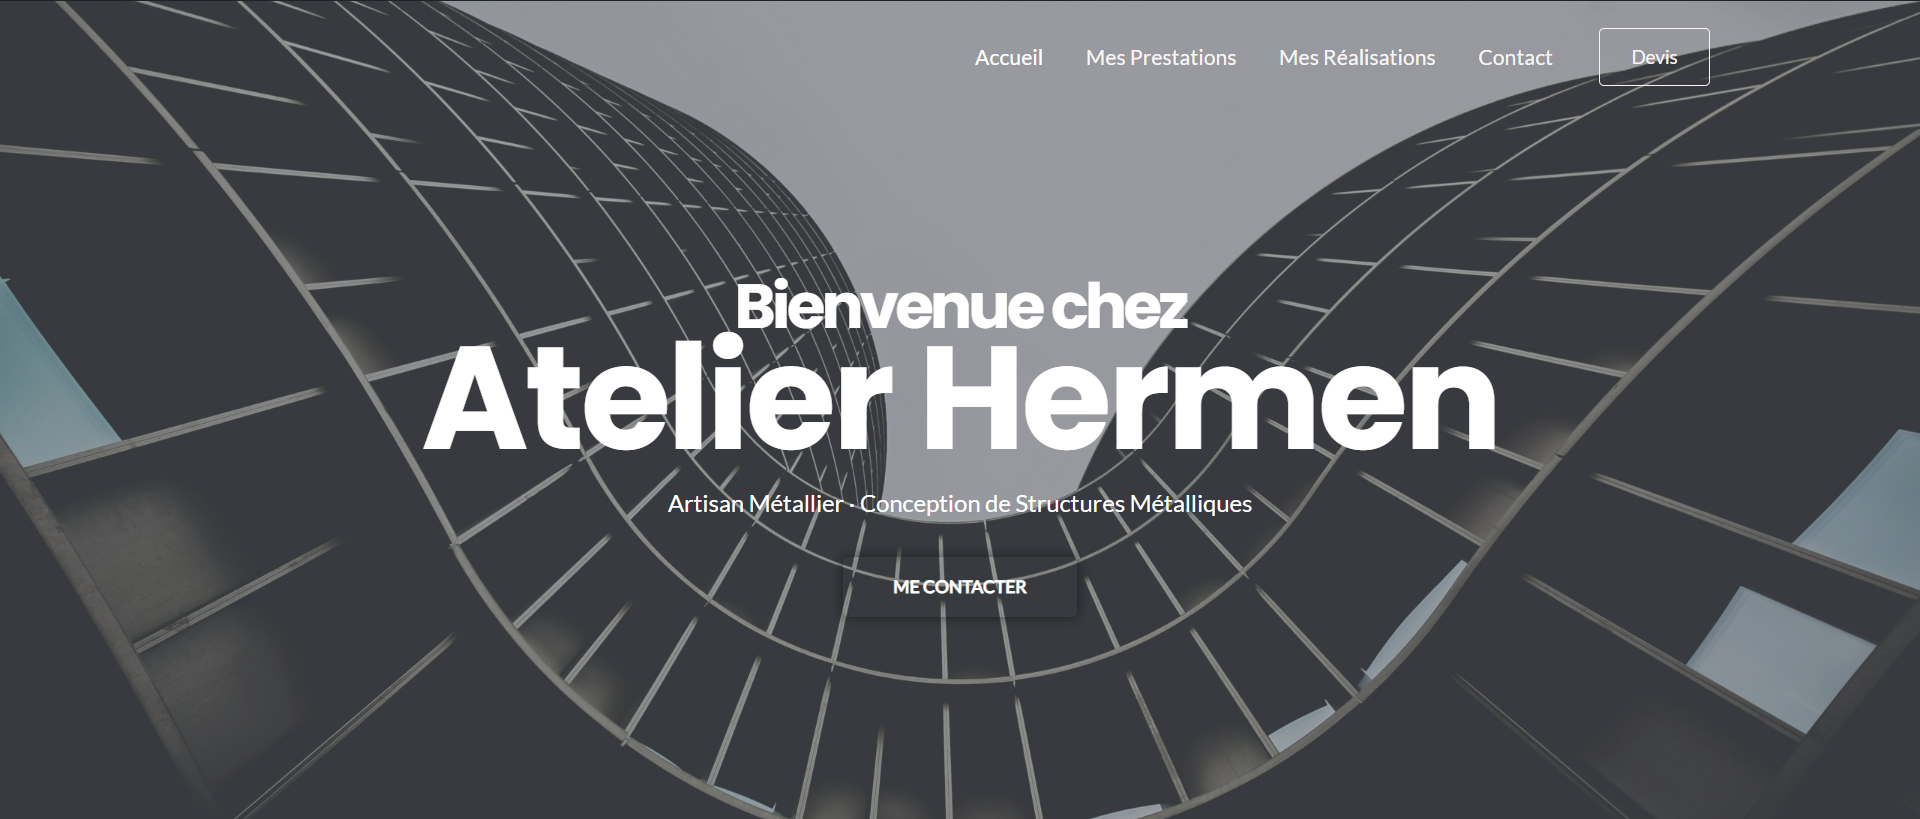 project Atelier Hermen